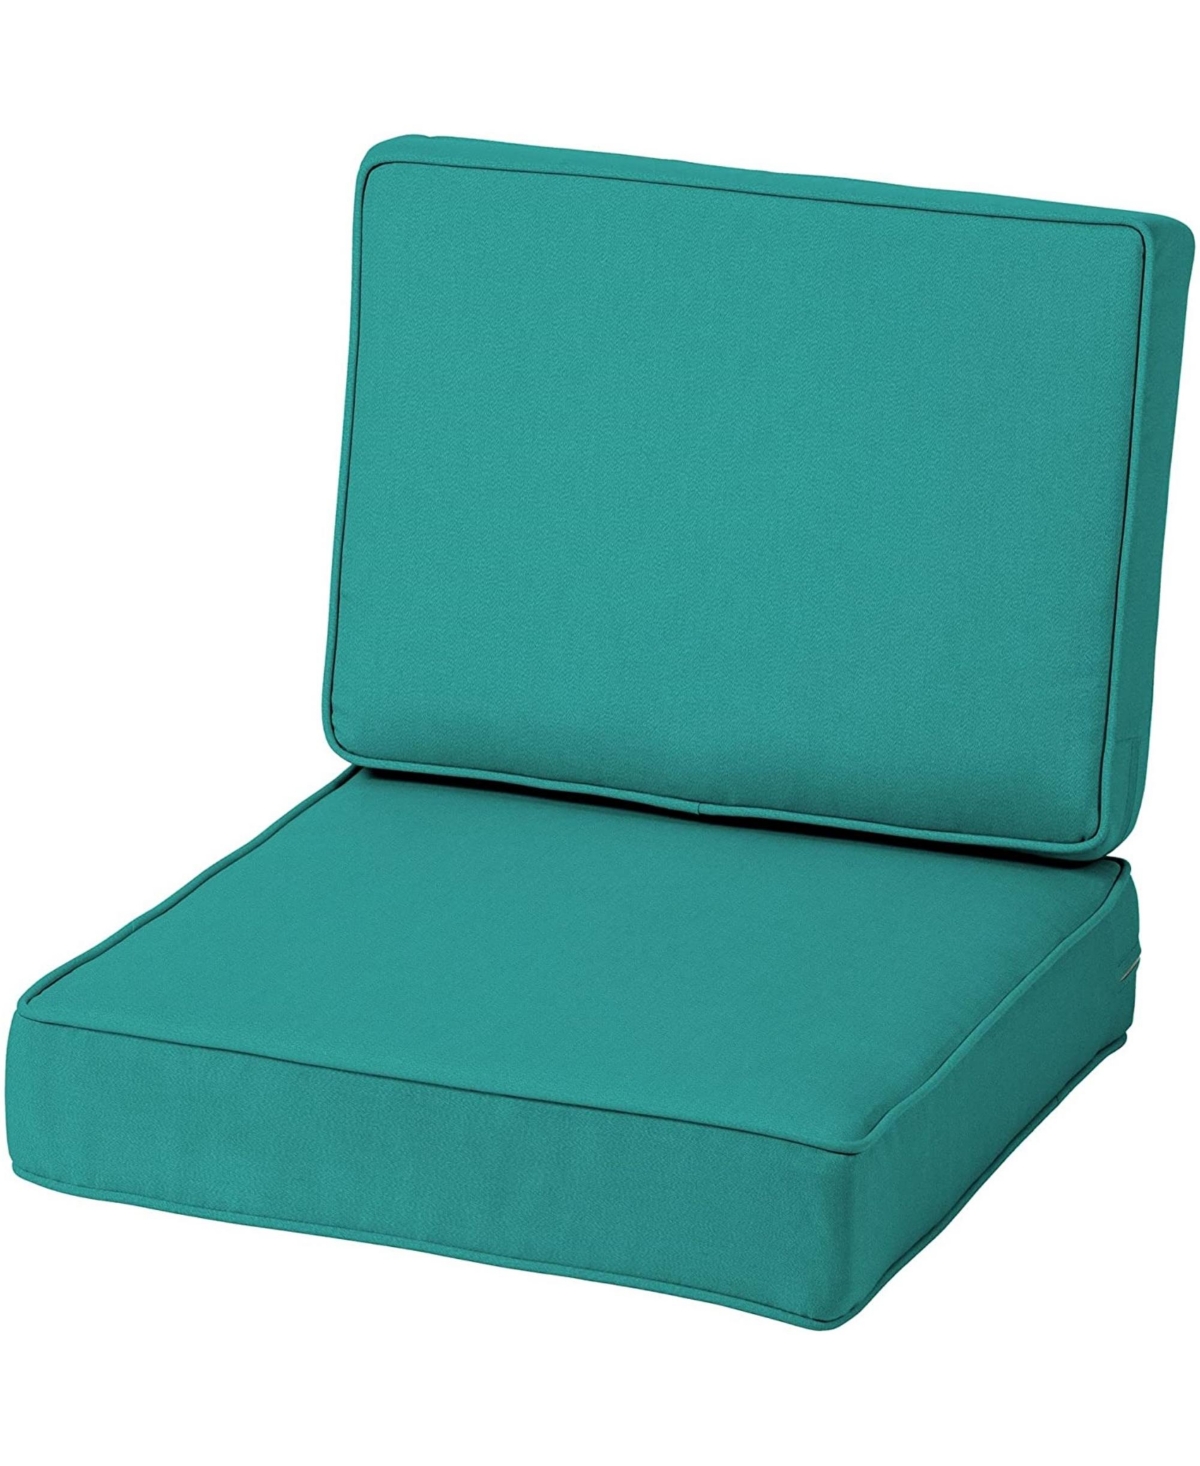 ProFoam EverTru Acrylic Seat Patio Cushion Set Teal - Teal